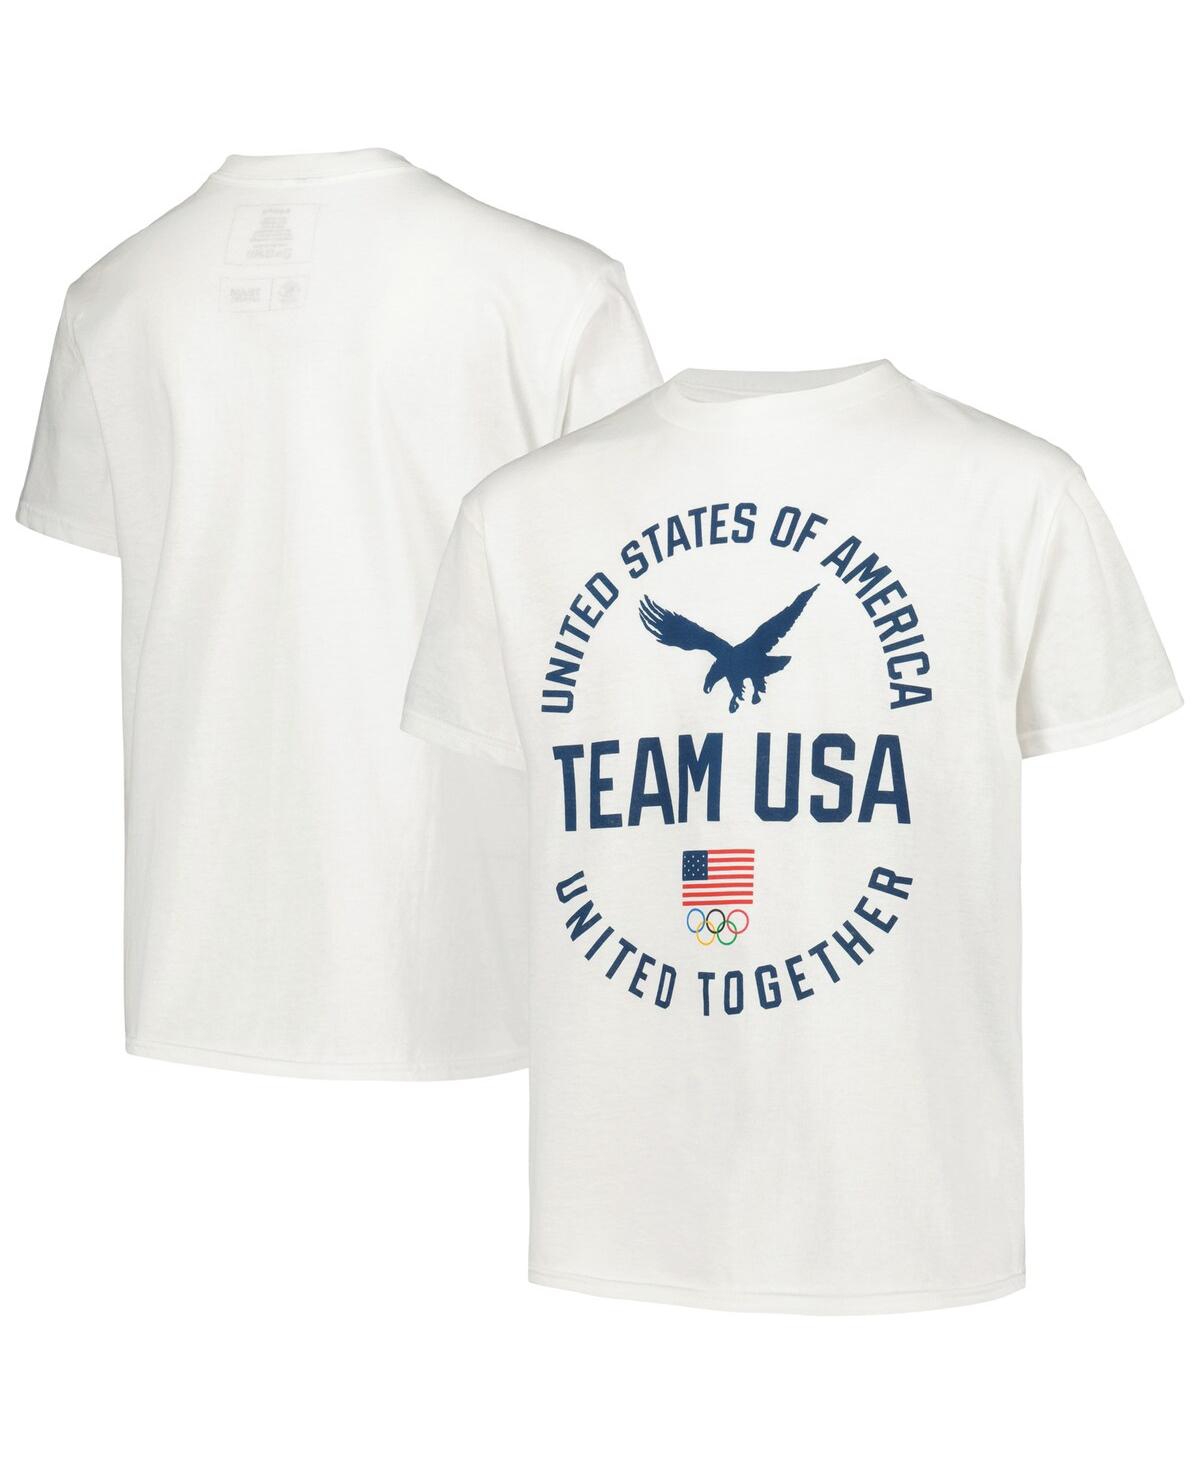 Outerstuff Kids' Big Boys White Team Usa Eagle United T-shirt